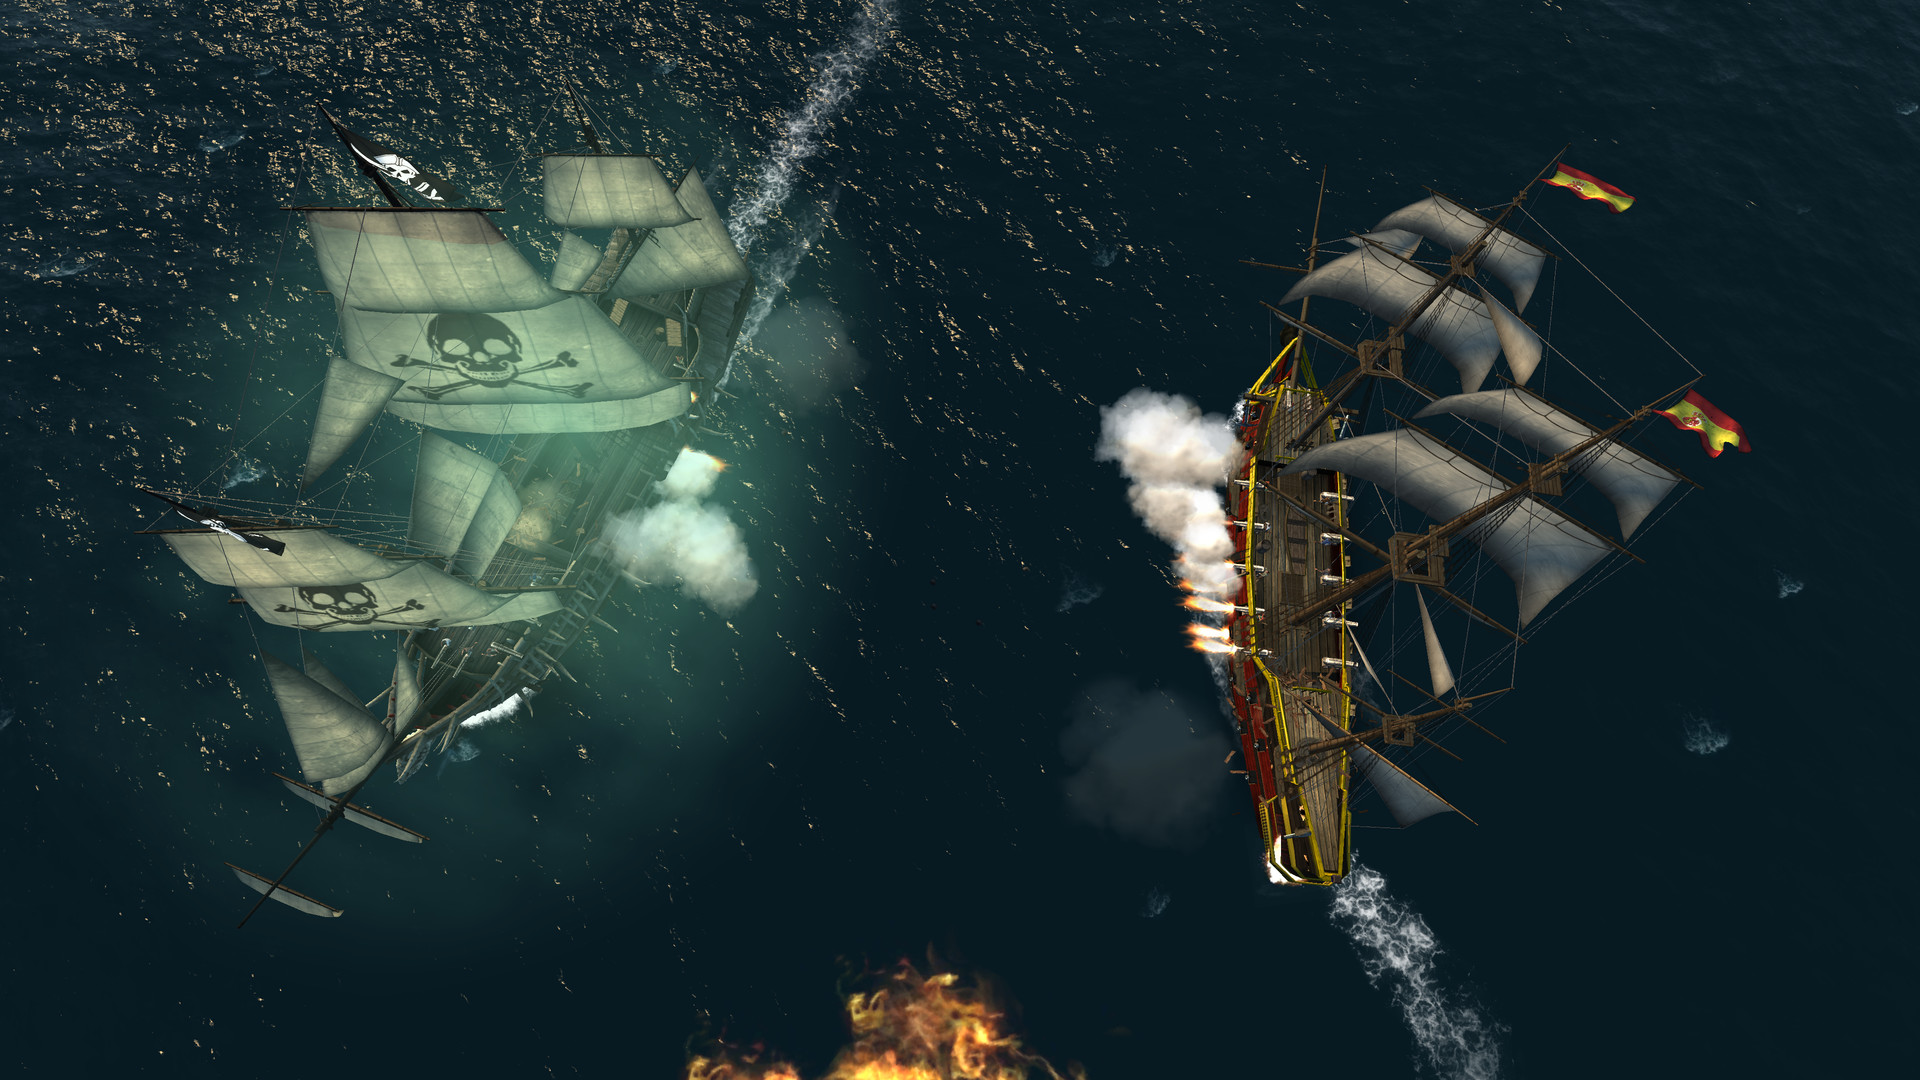 The Pirate: Plague of the Dead screenshot